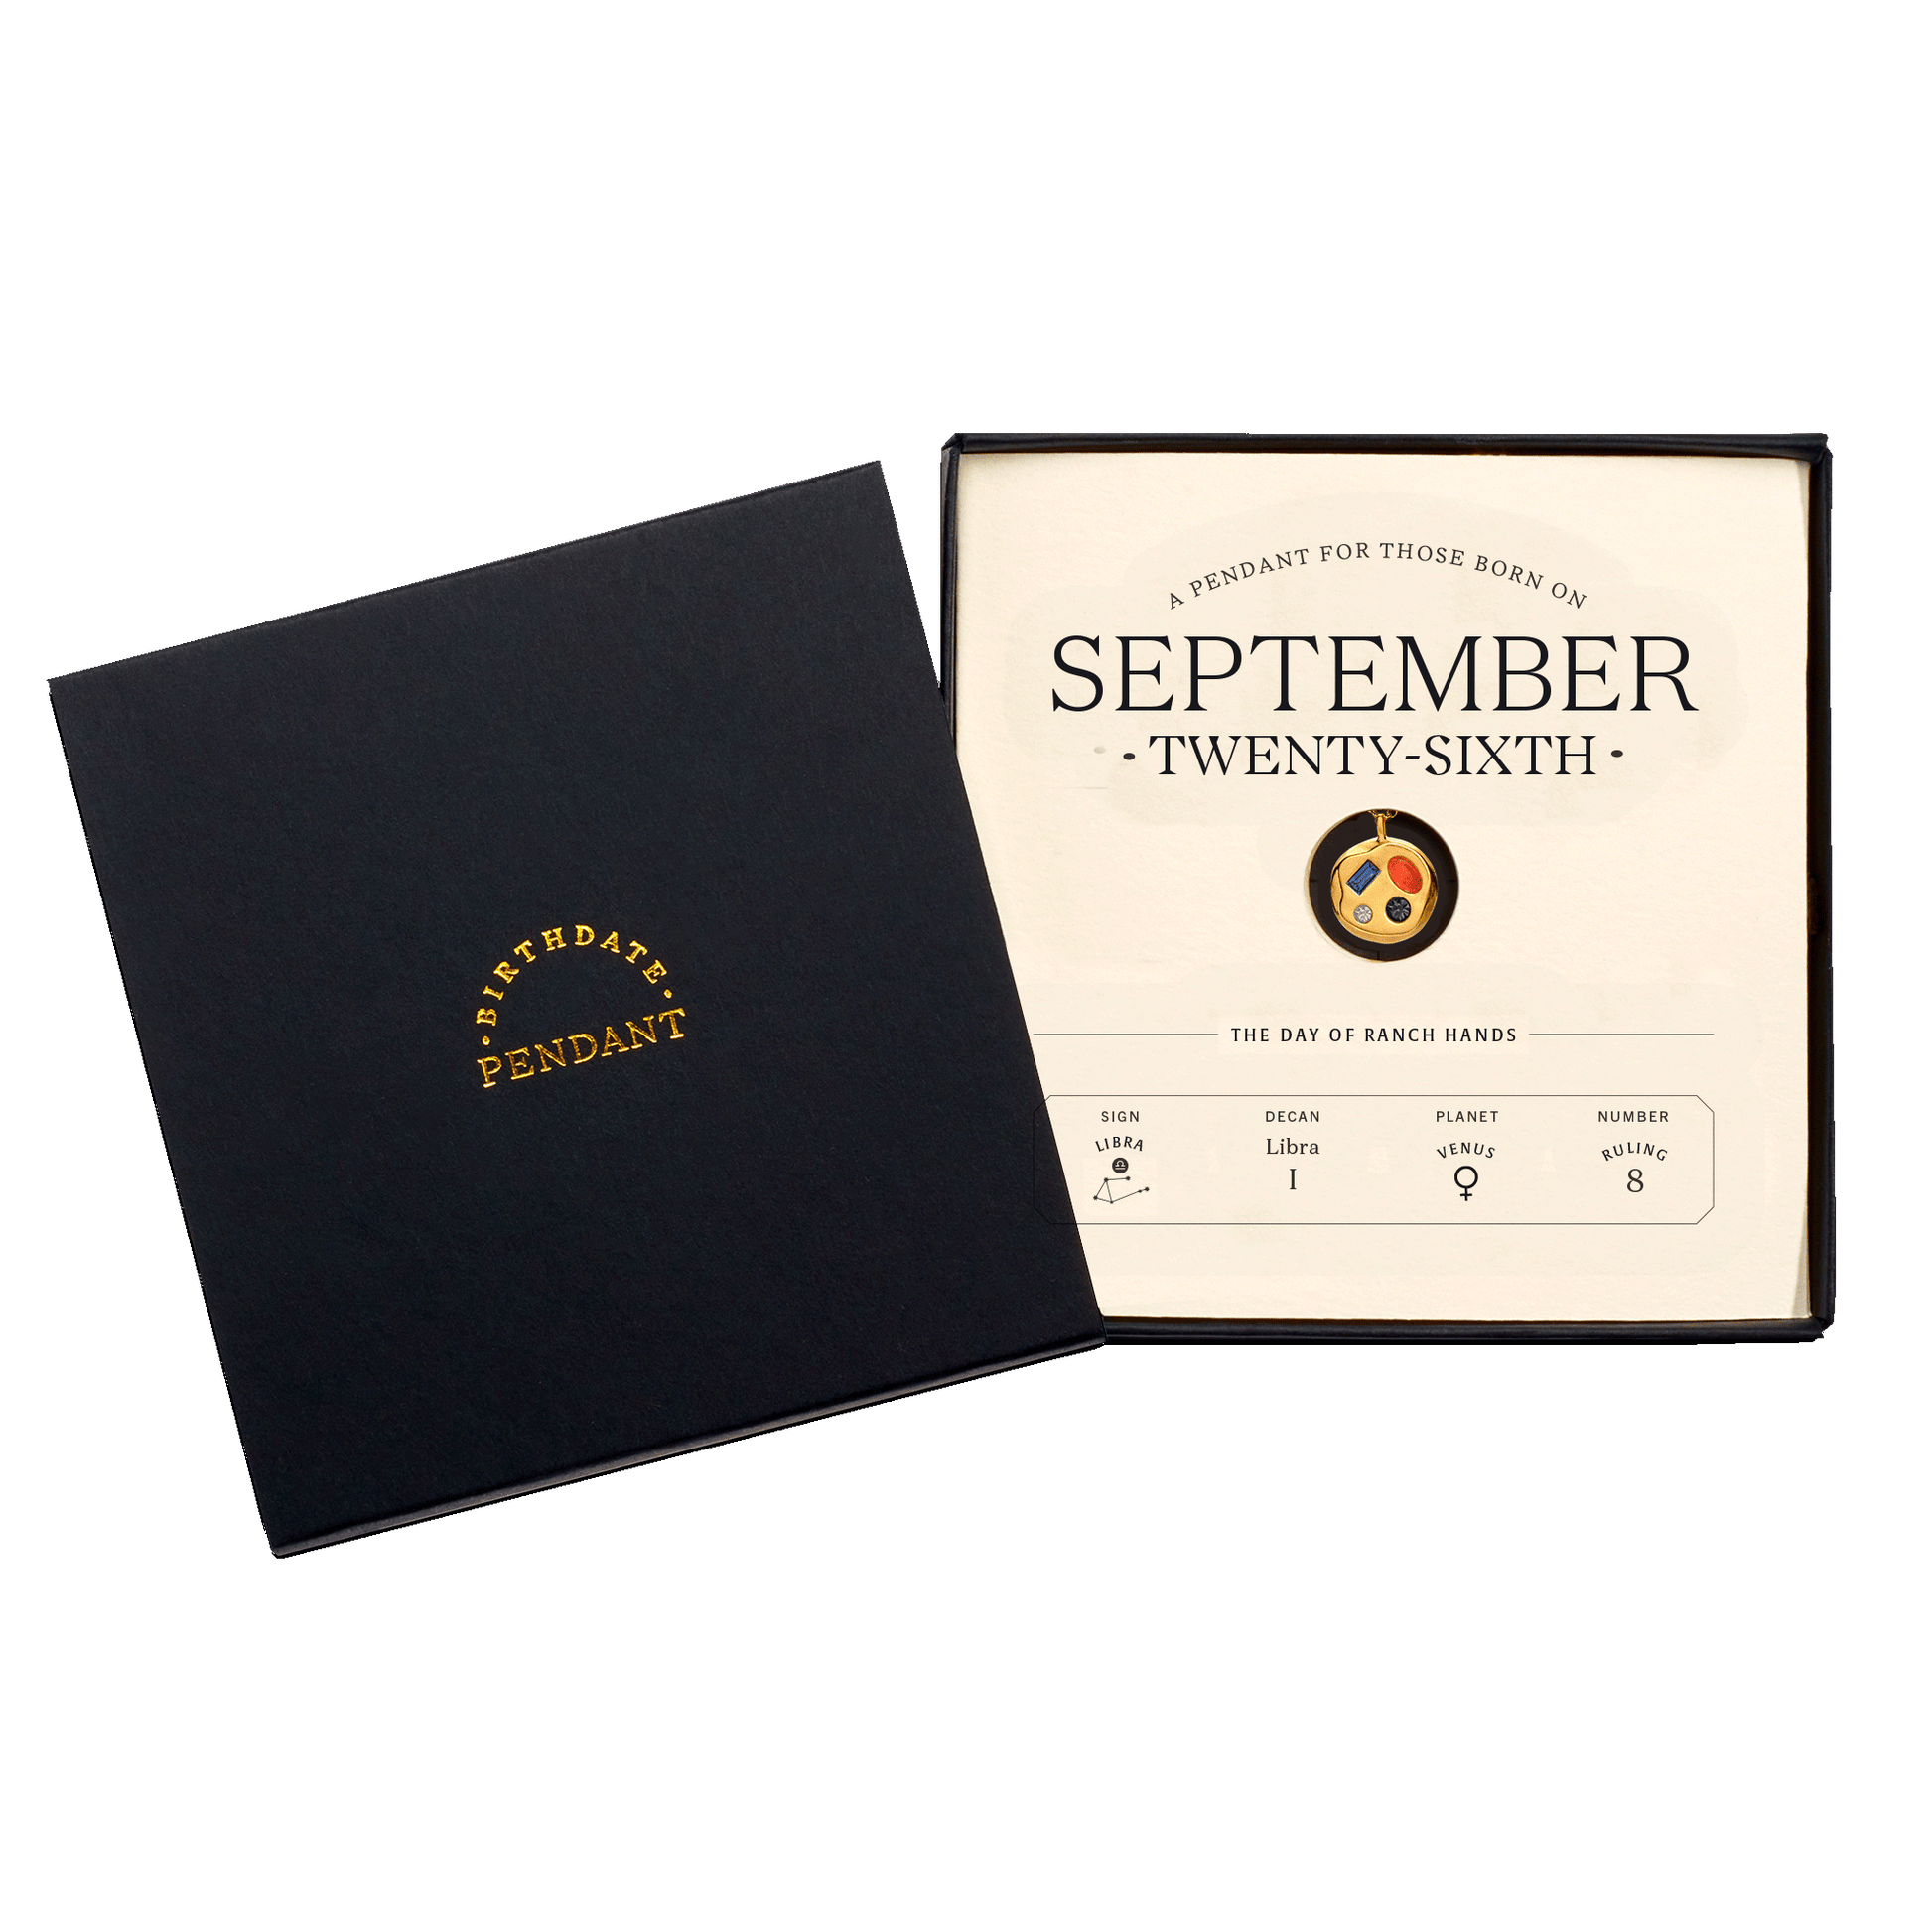 The September Twenty-Sixth Pendant inside its box